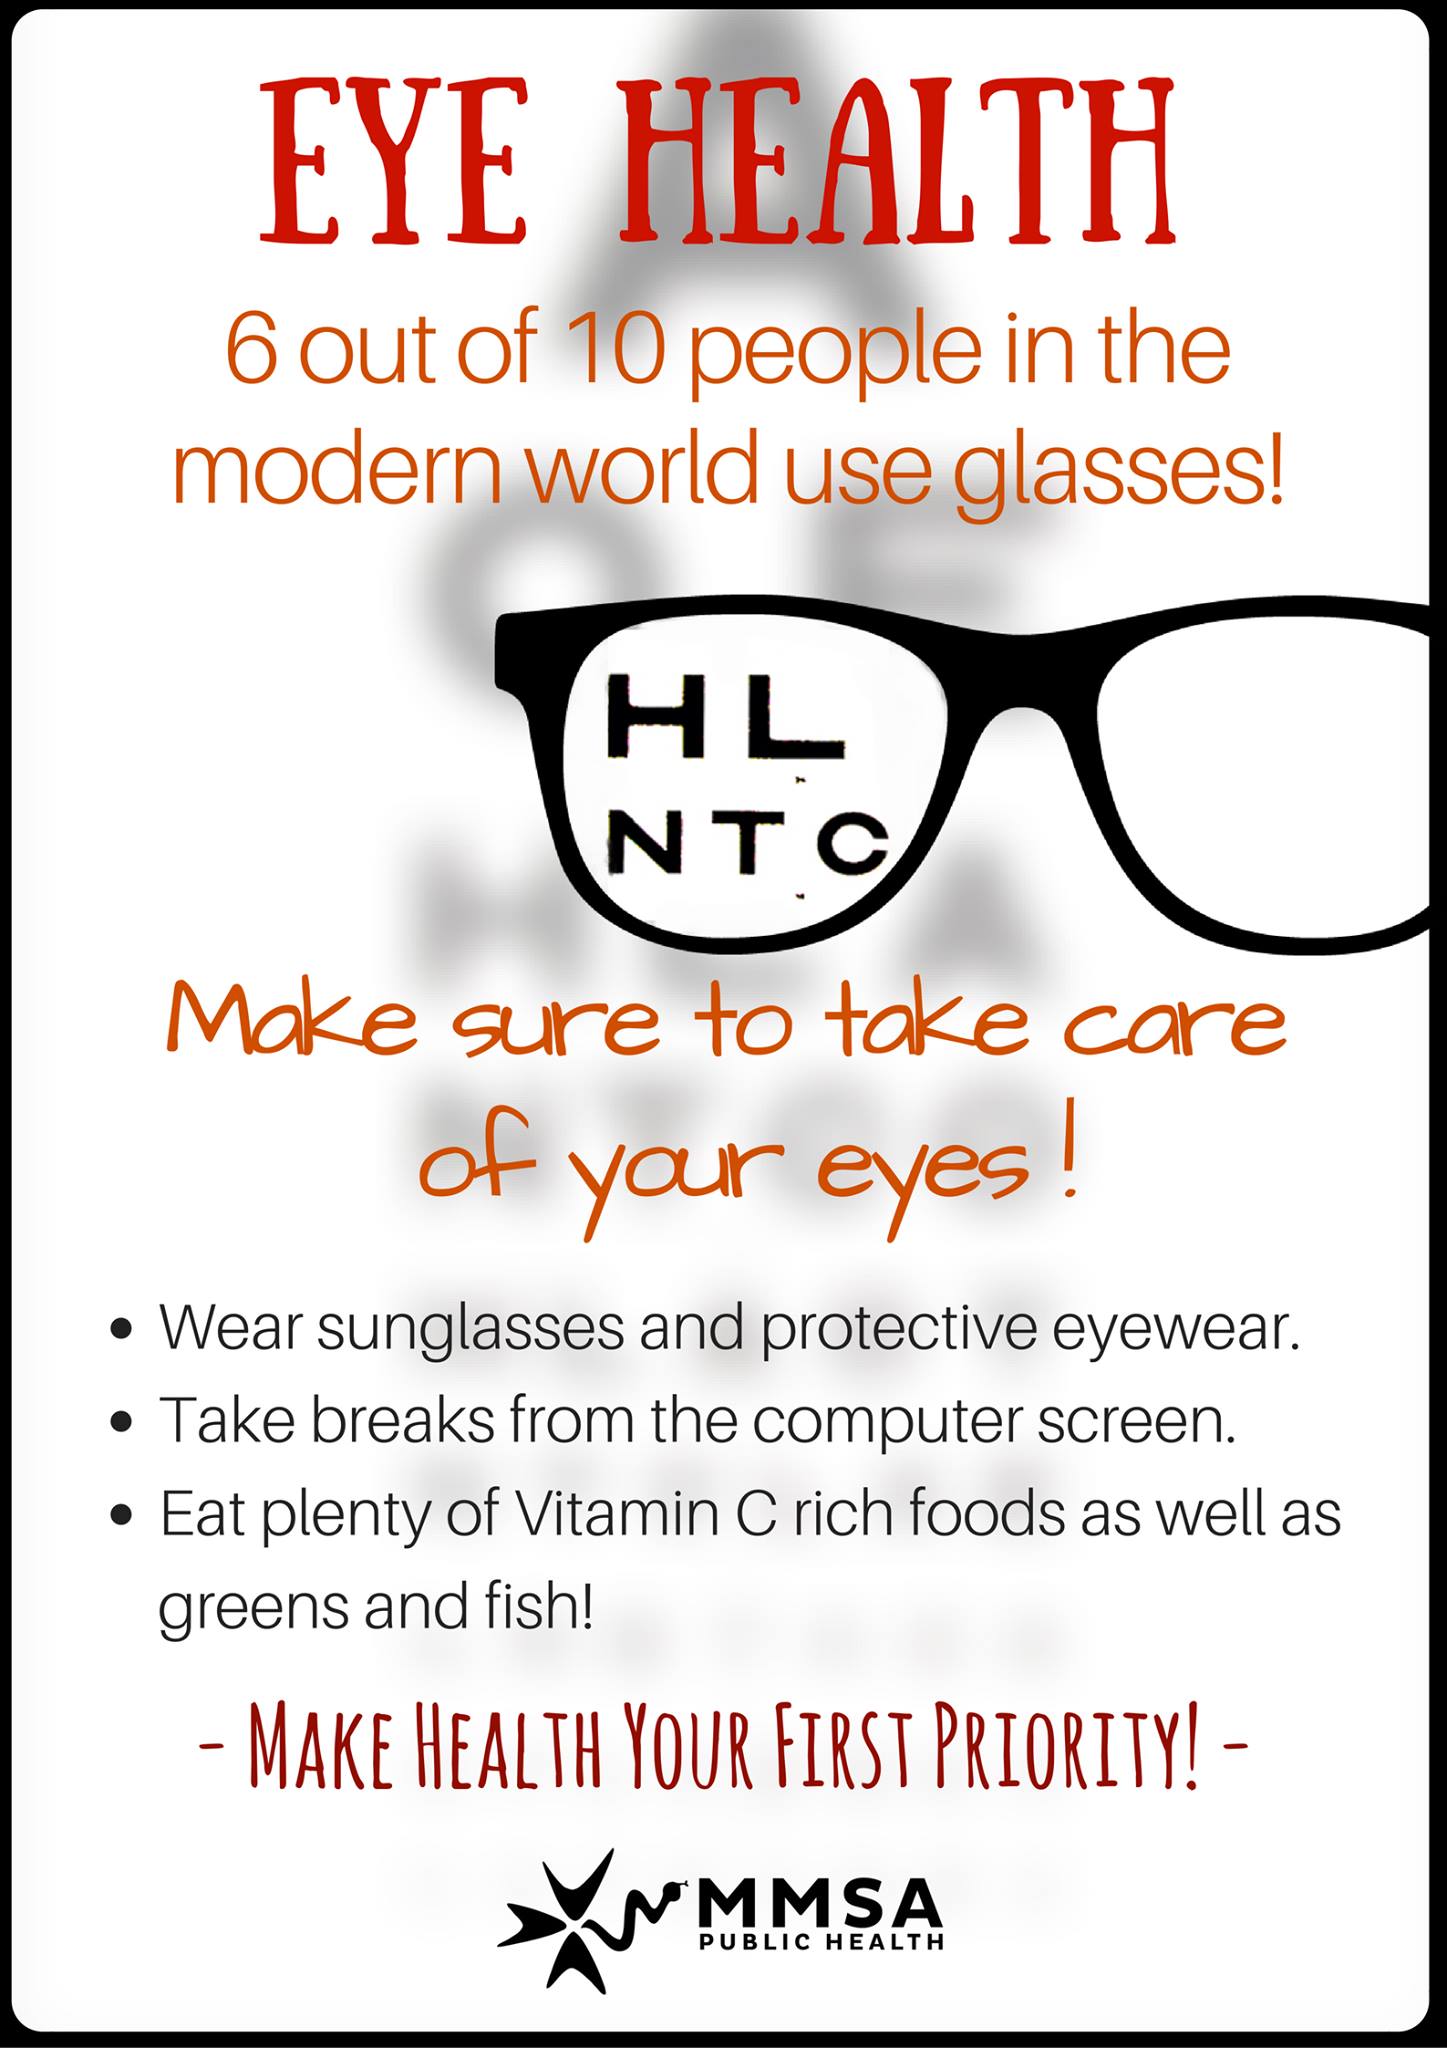 Eye Health campaign by the MMSA